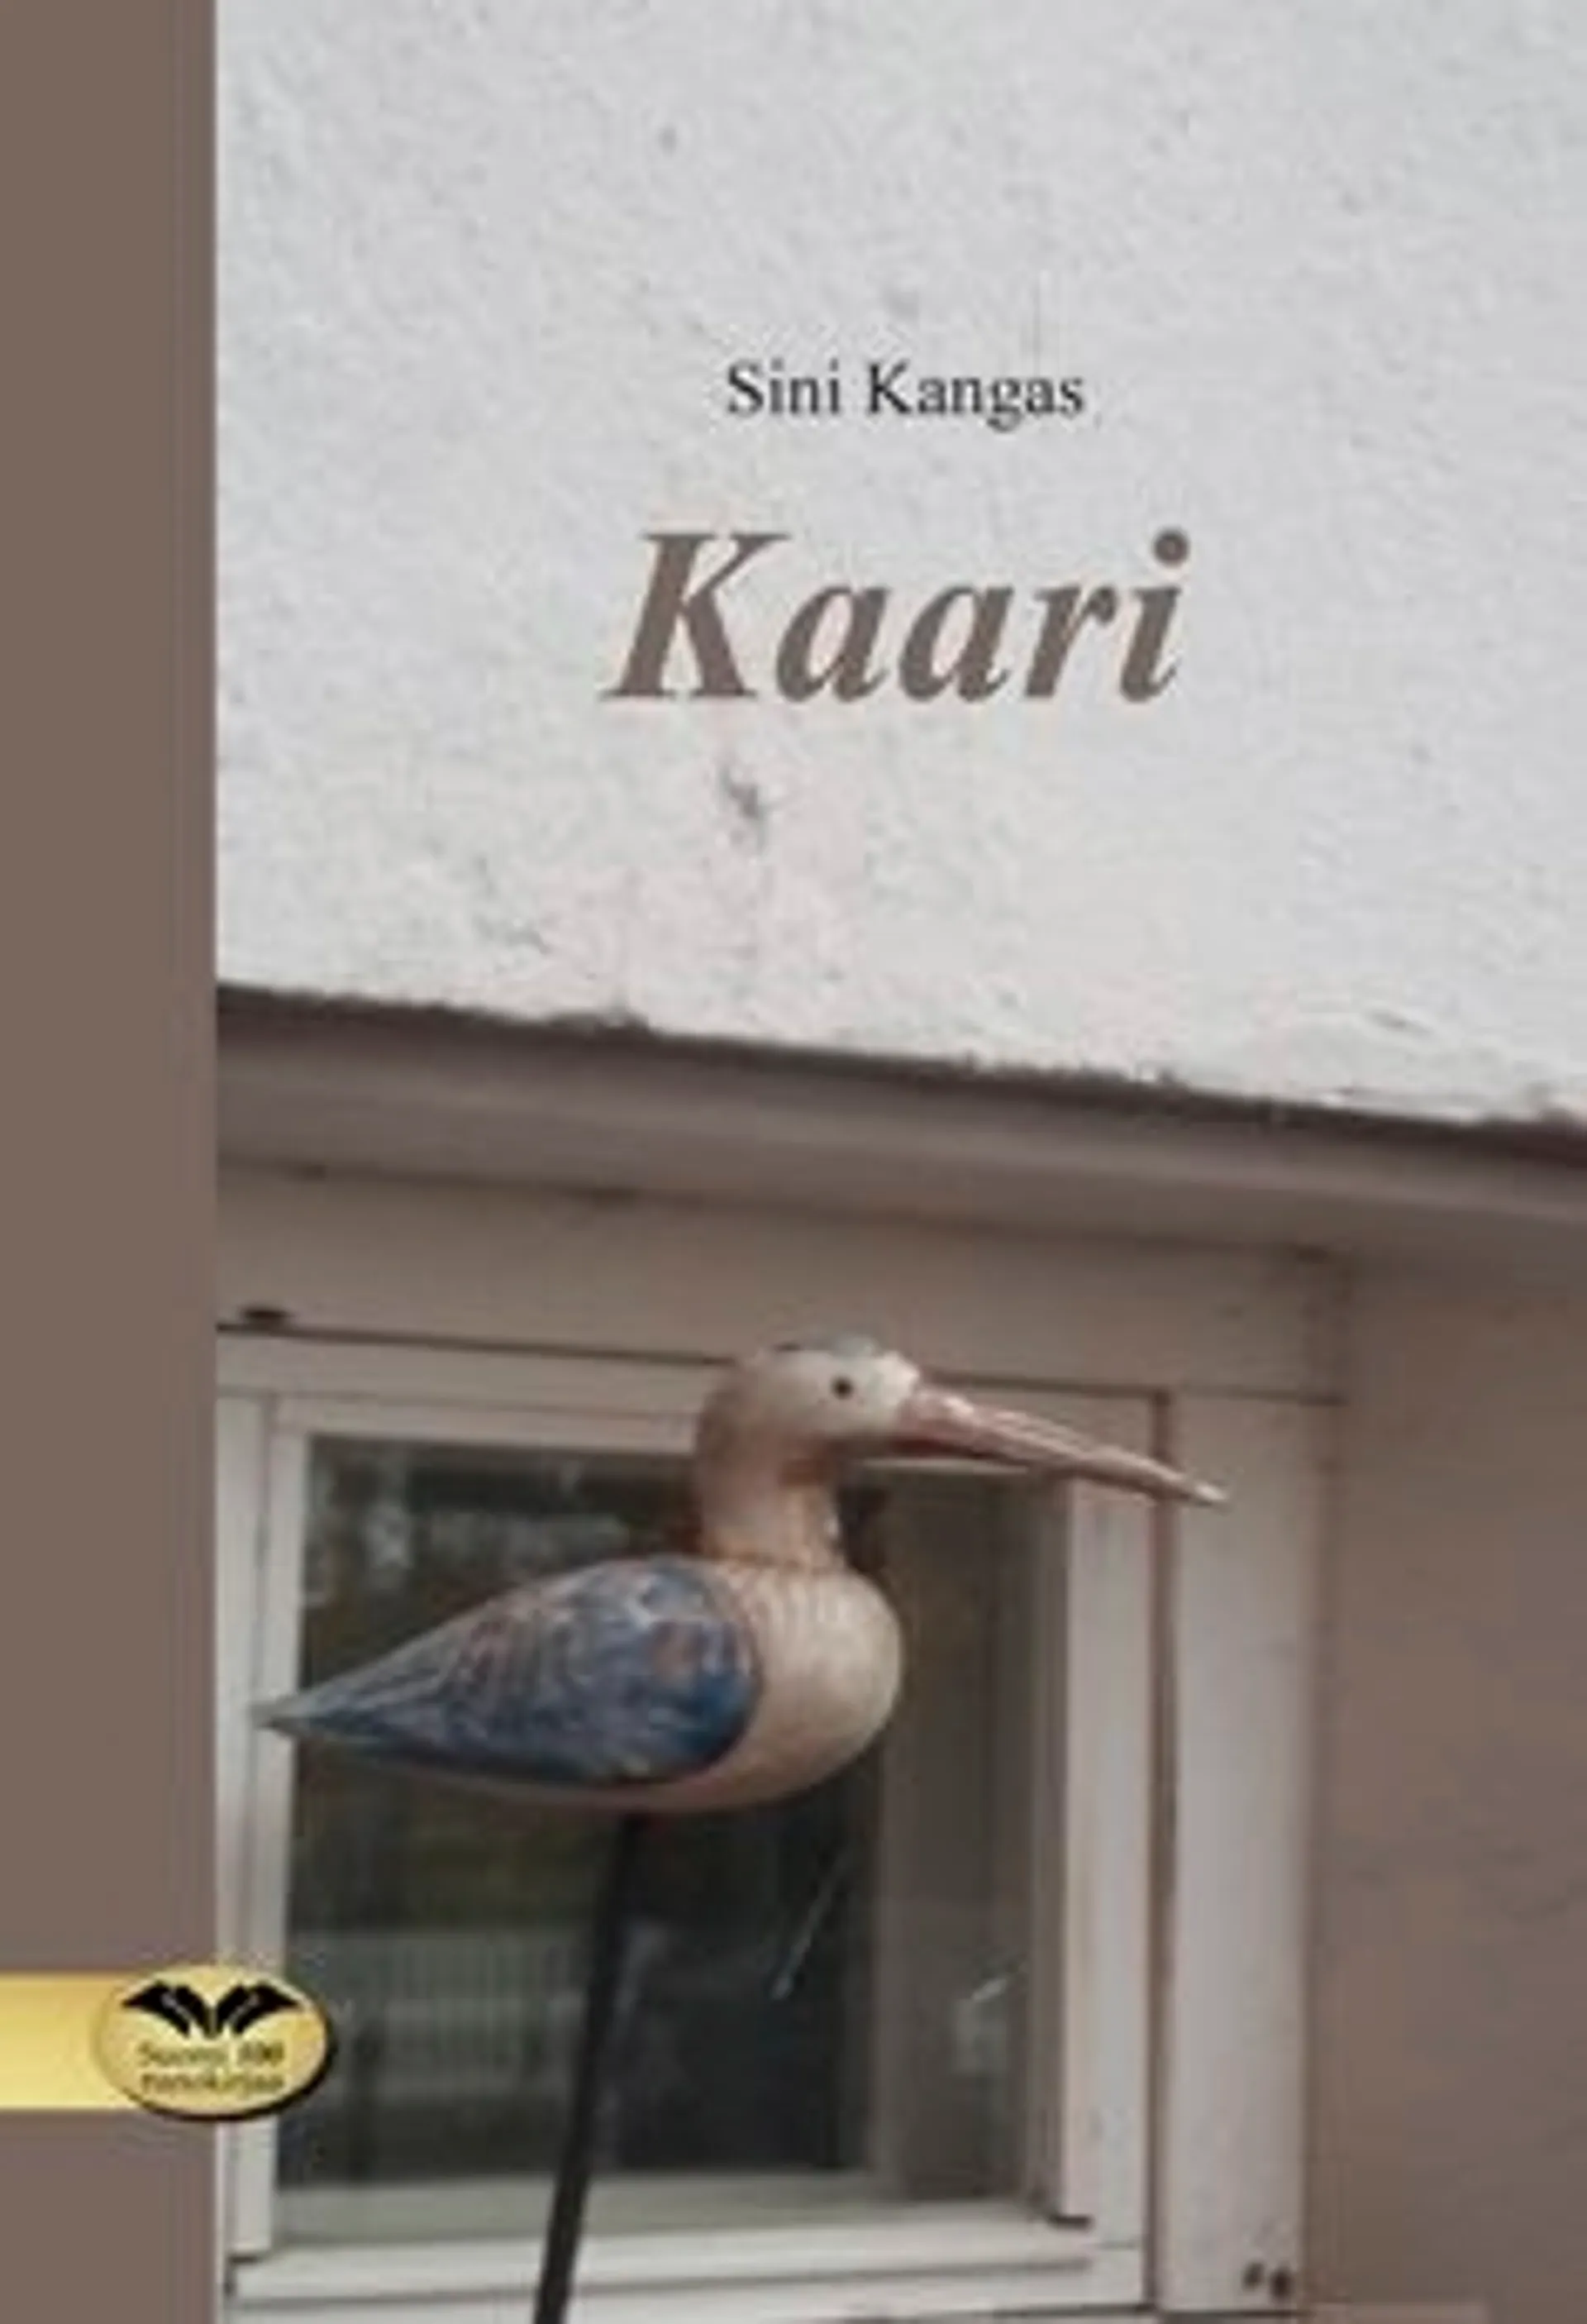 Kangas, Kaari